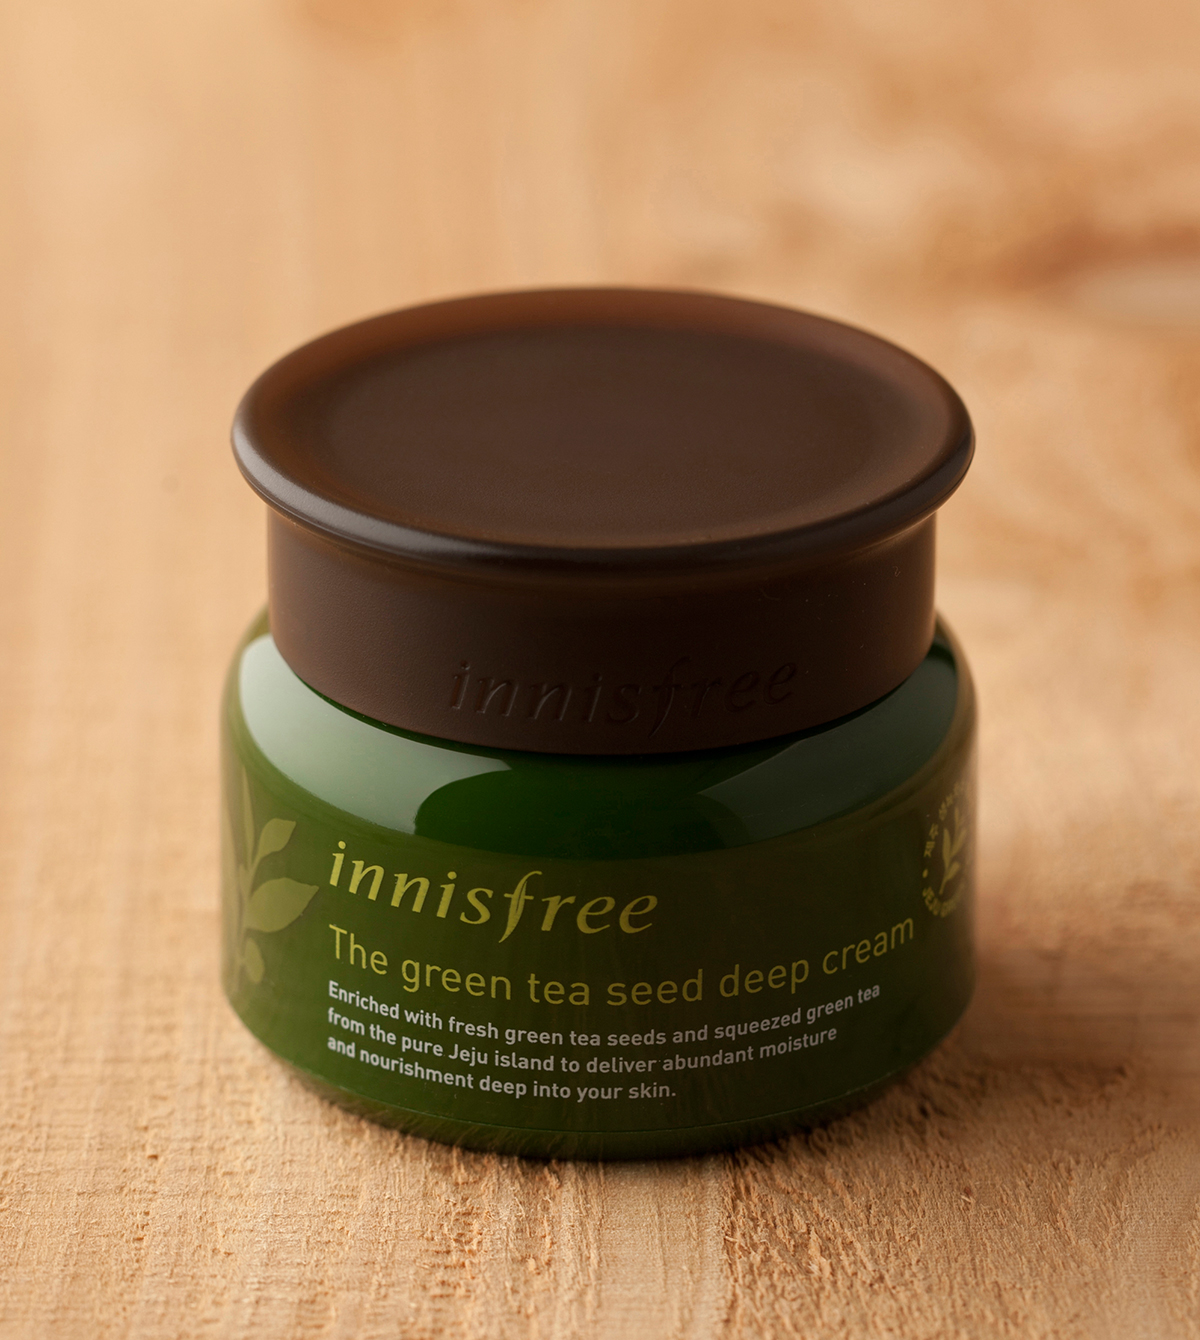 Innisfree The Green Tea Seed Deep Cream - Innisfree Skin Care - Top 10 Moisturizers from Innisfree India to Try this Season